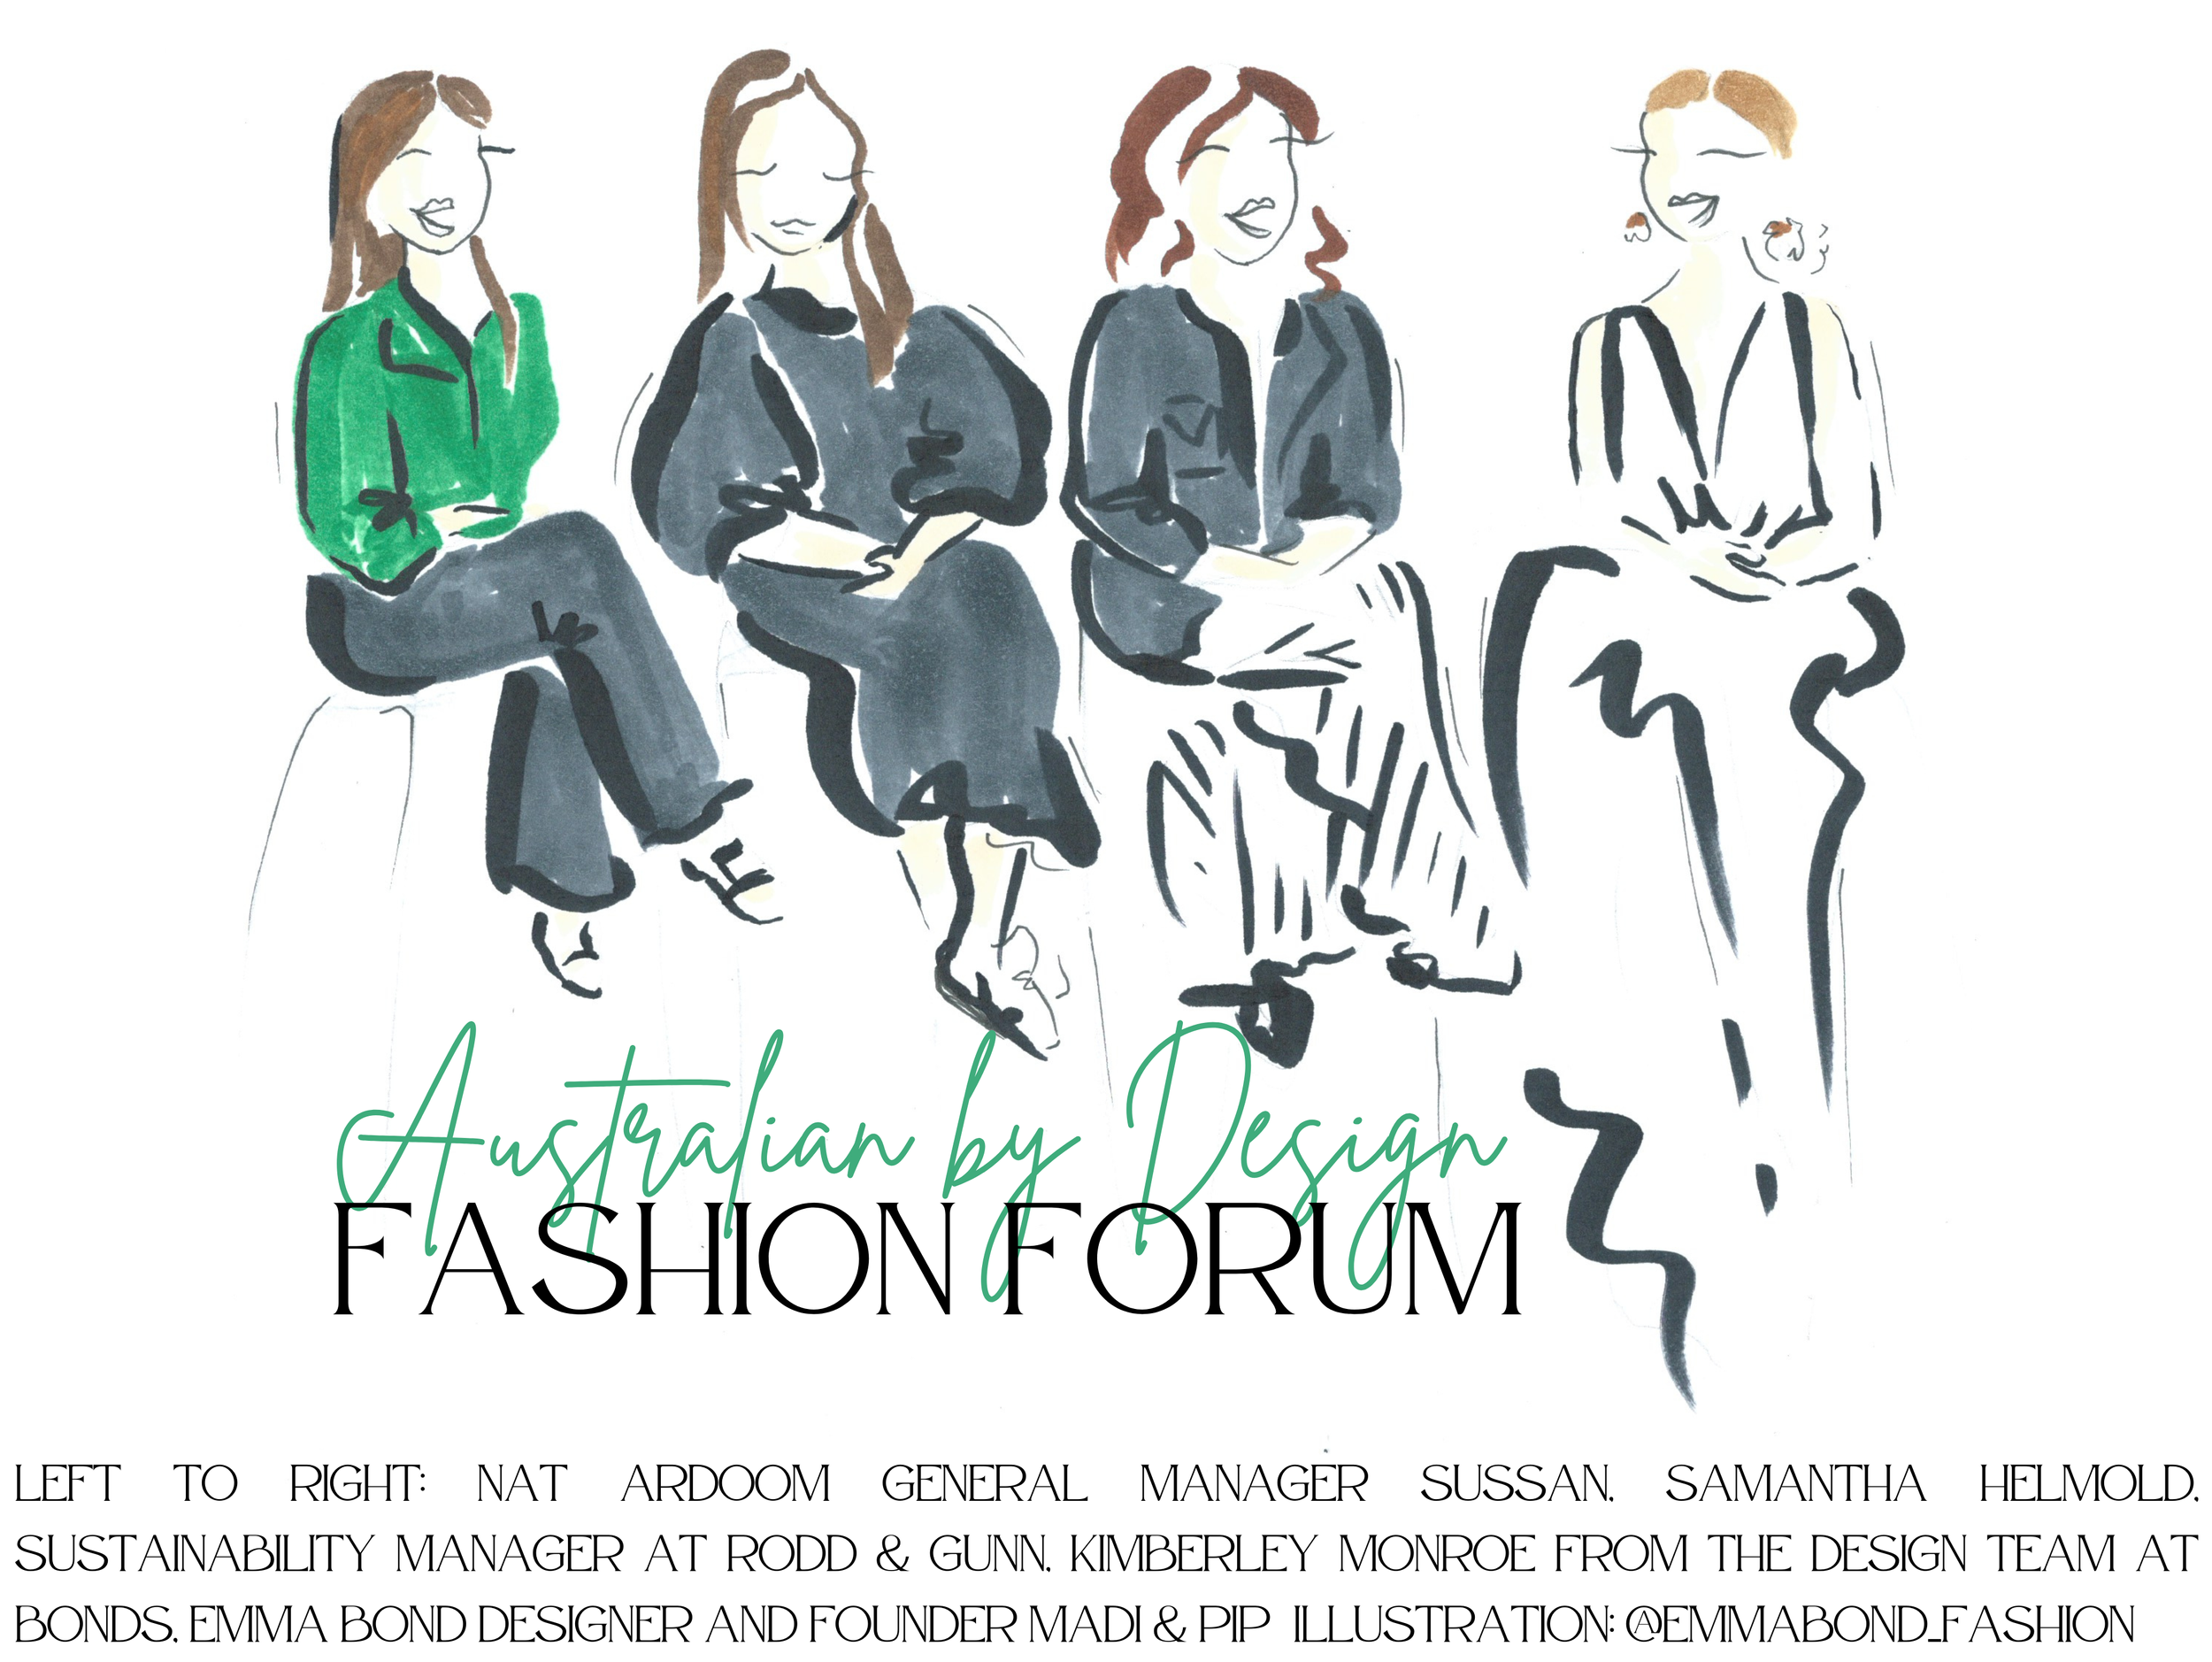 Fashion-Forum-illustration-by-emma-bond.png